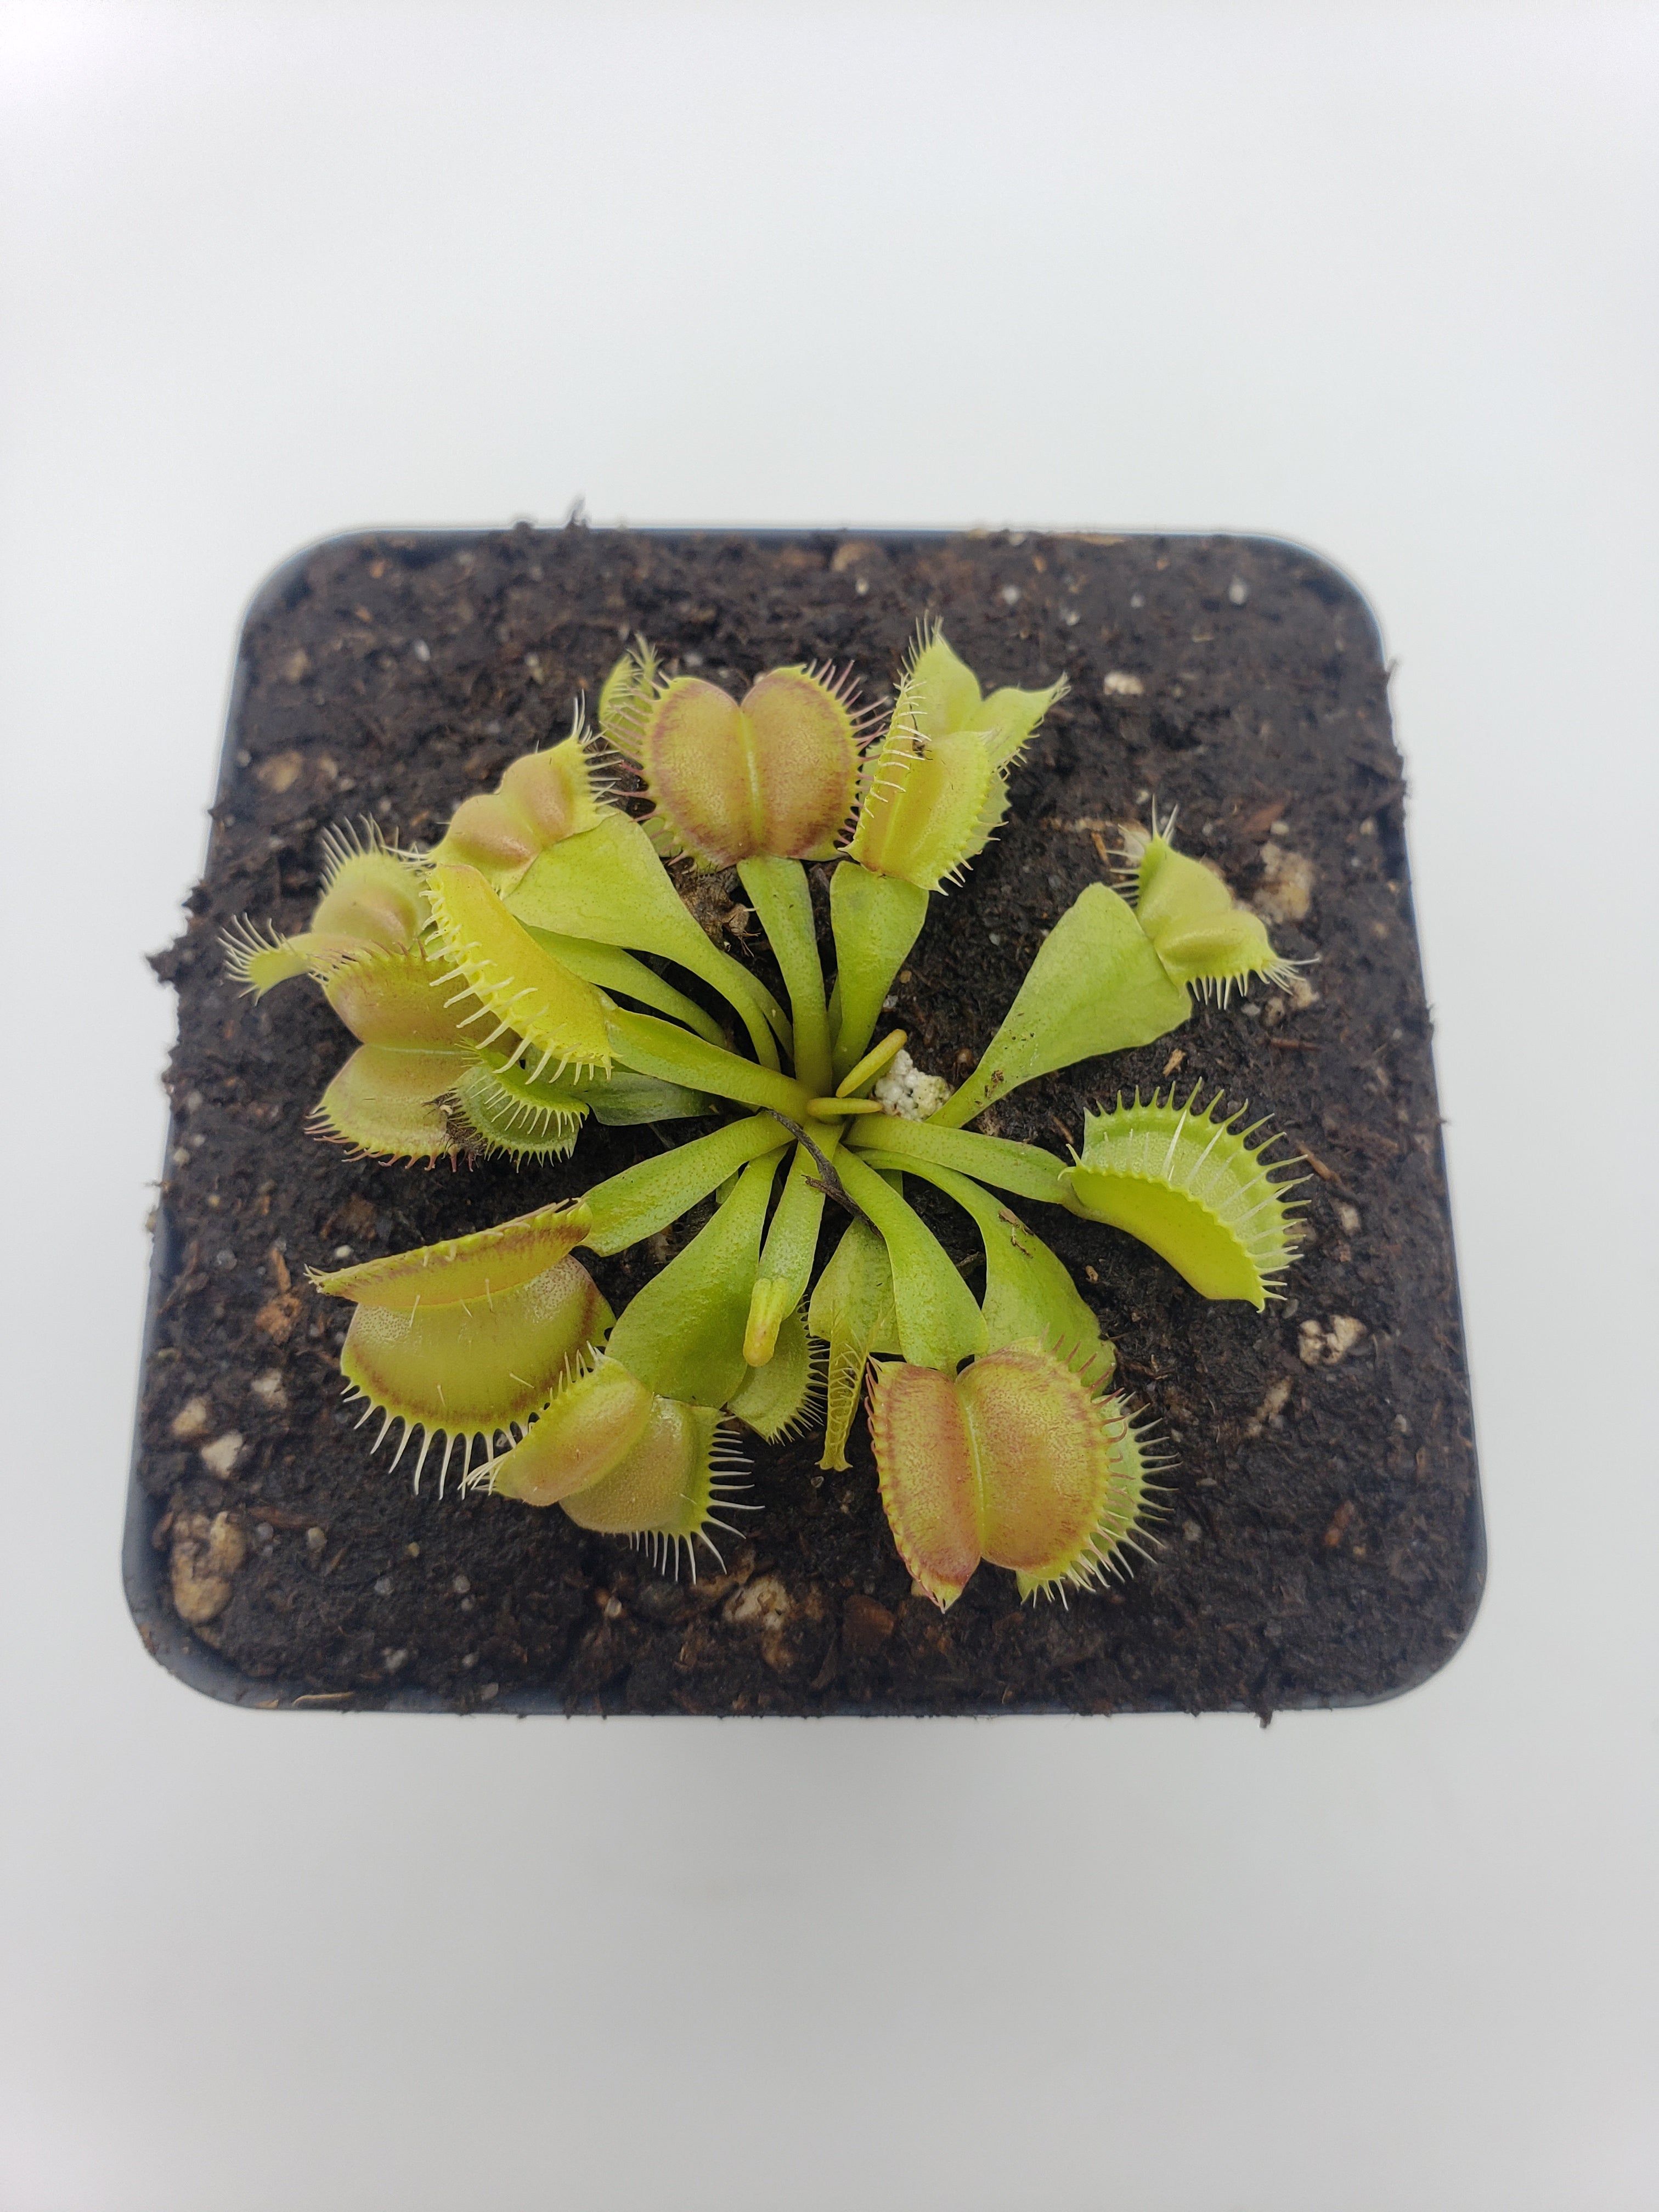 Venus flytrap (Dionaea muscipula) 'Moon trap' - Rainbow Carnivorous Plants LLC